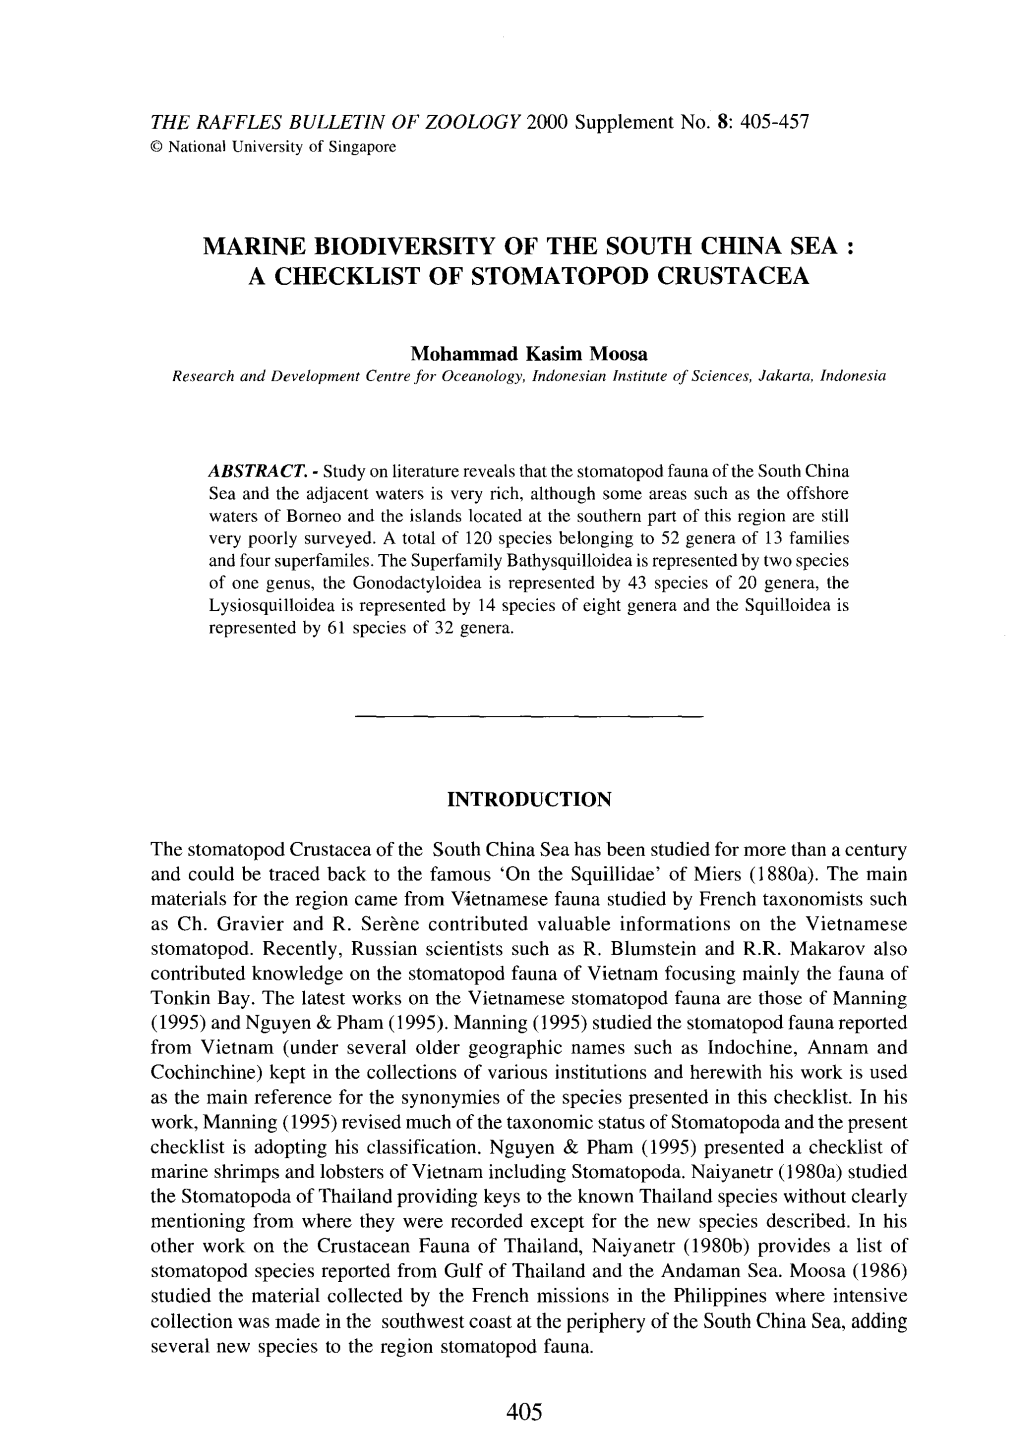 Marine Biodiversity of the South China Sea a Checklist of Stomatopod Crustacea